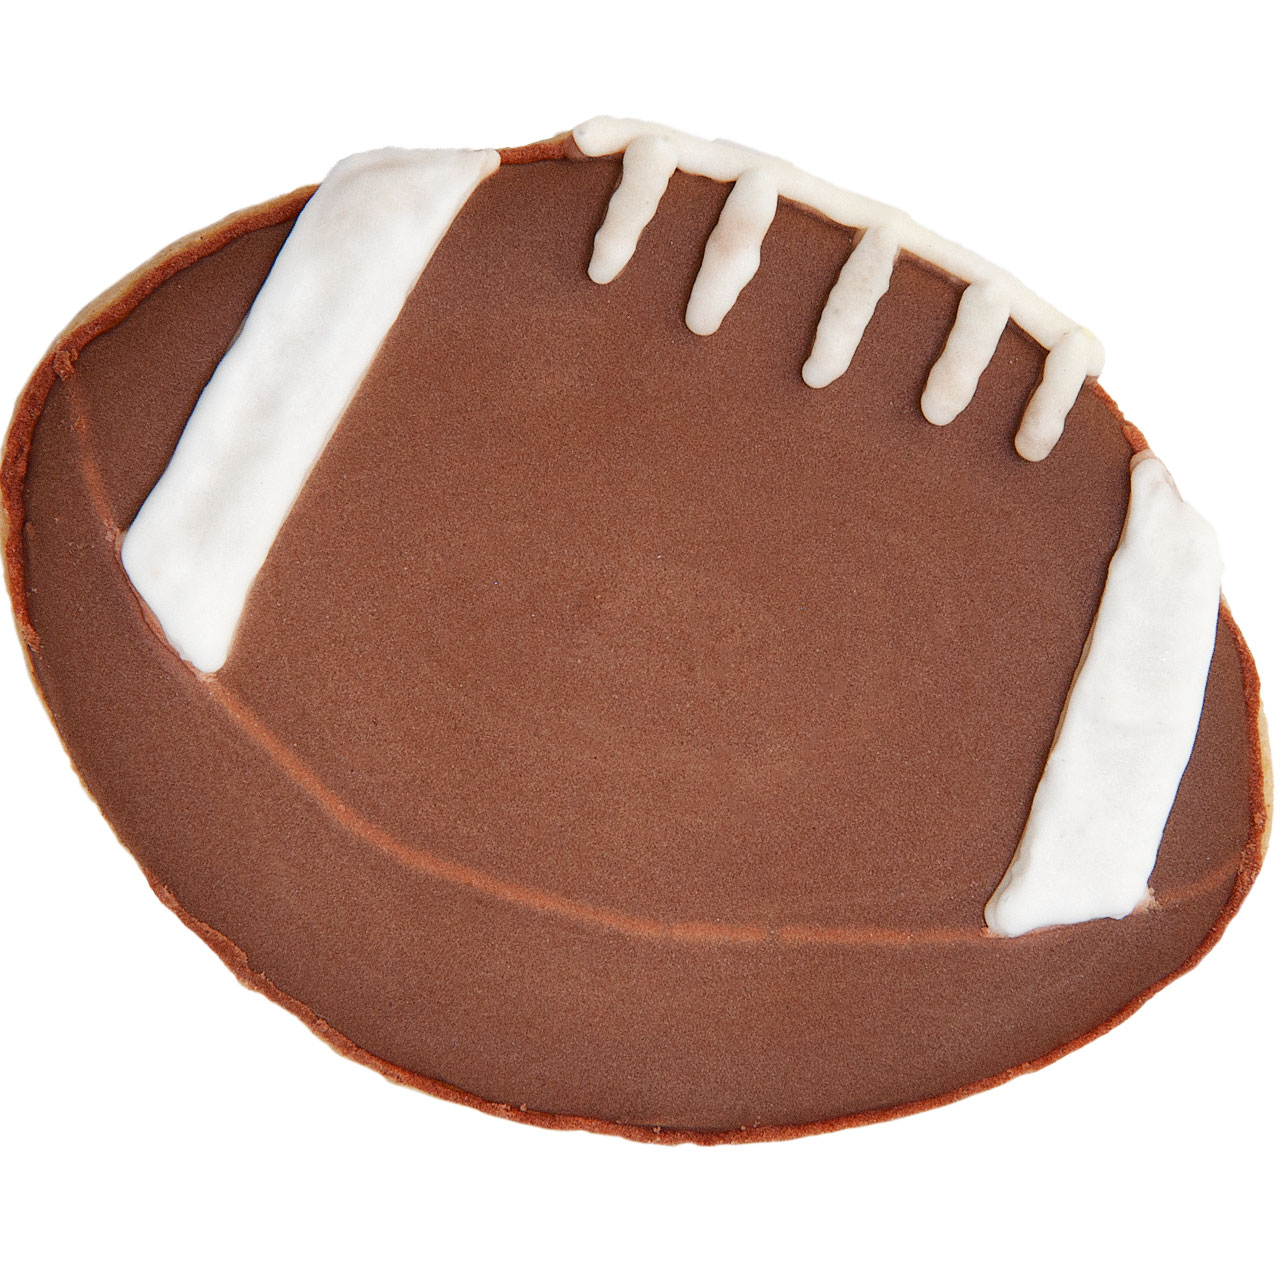 Cookie Cutter - American Football 